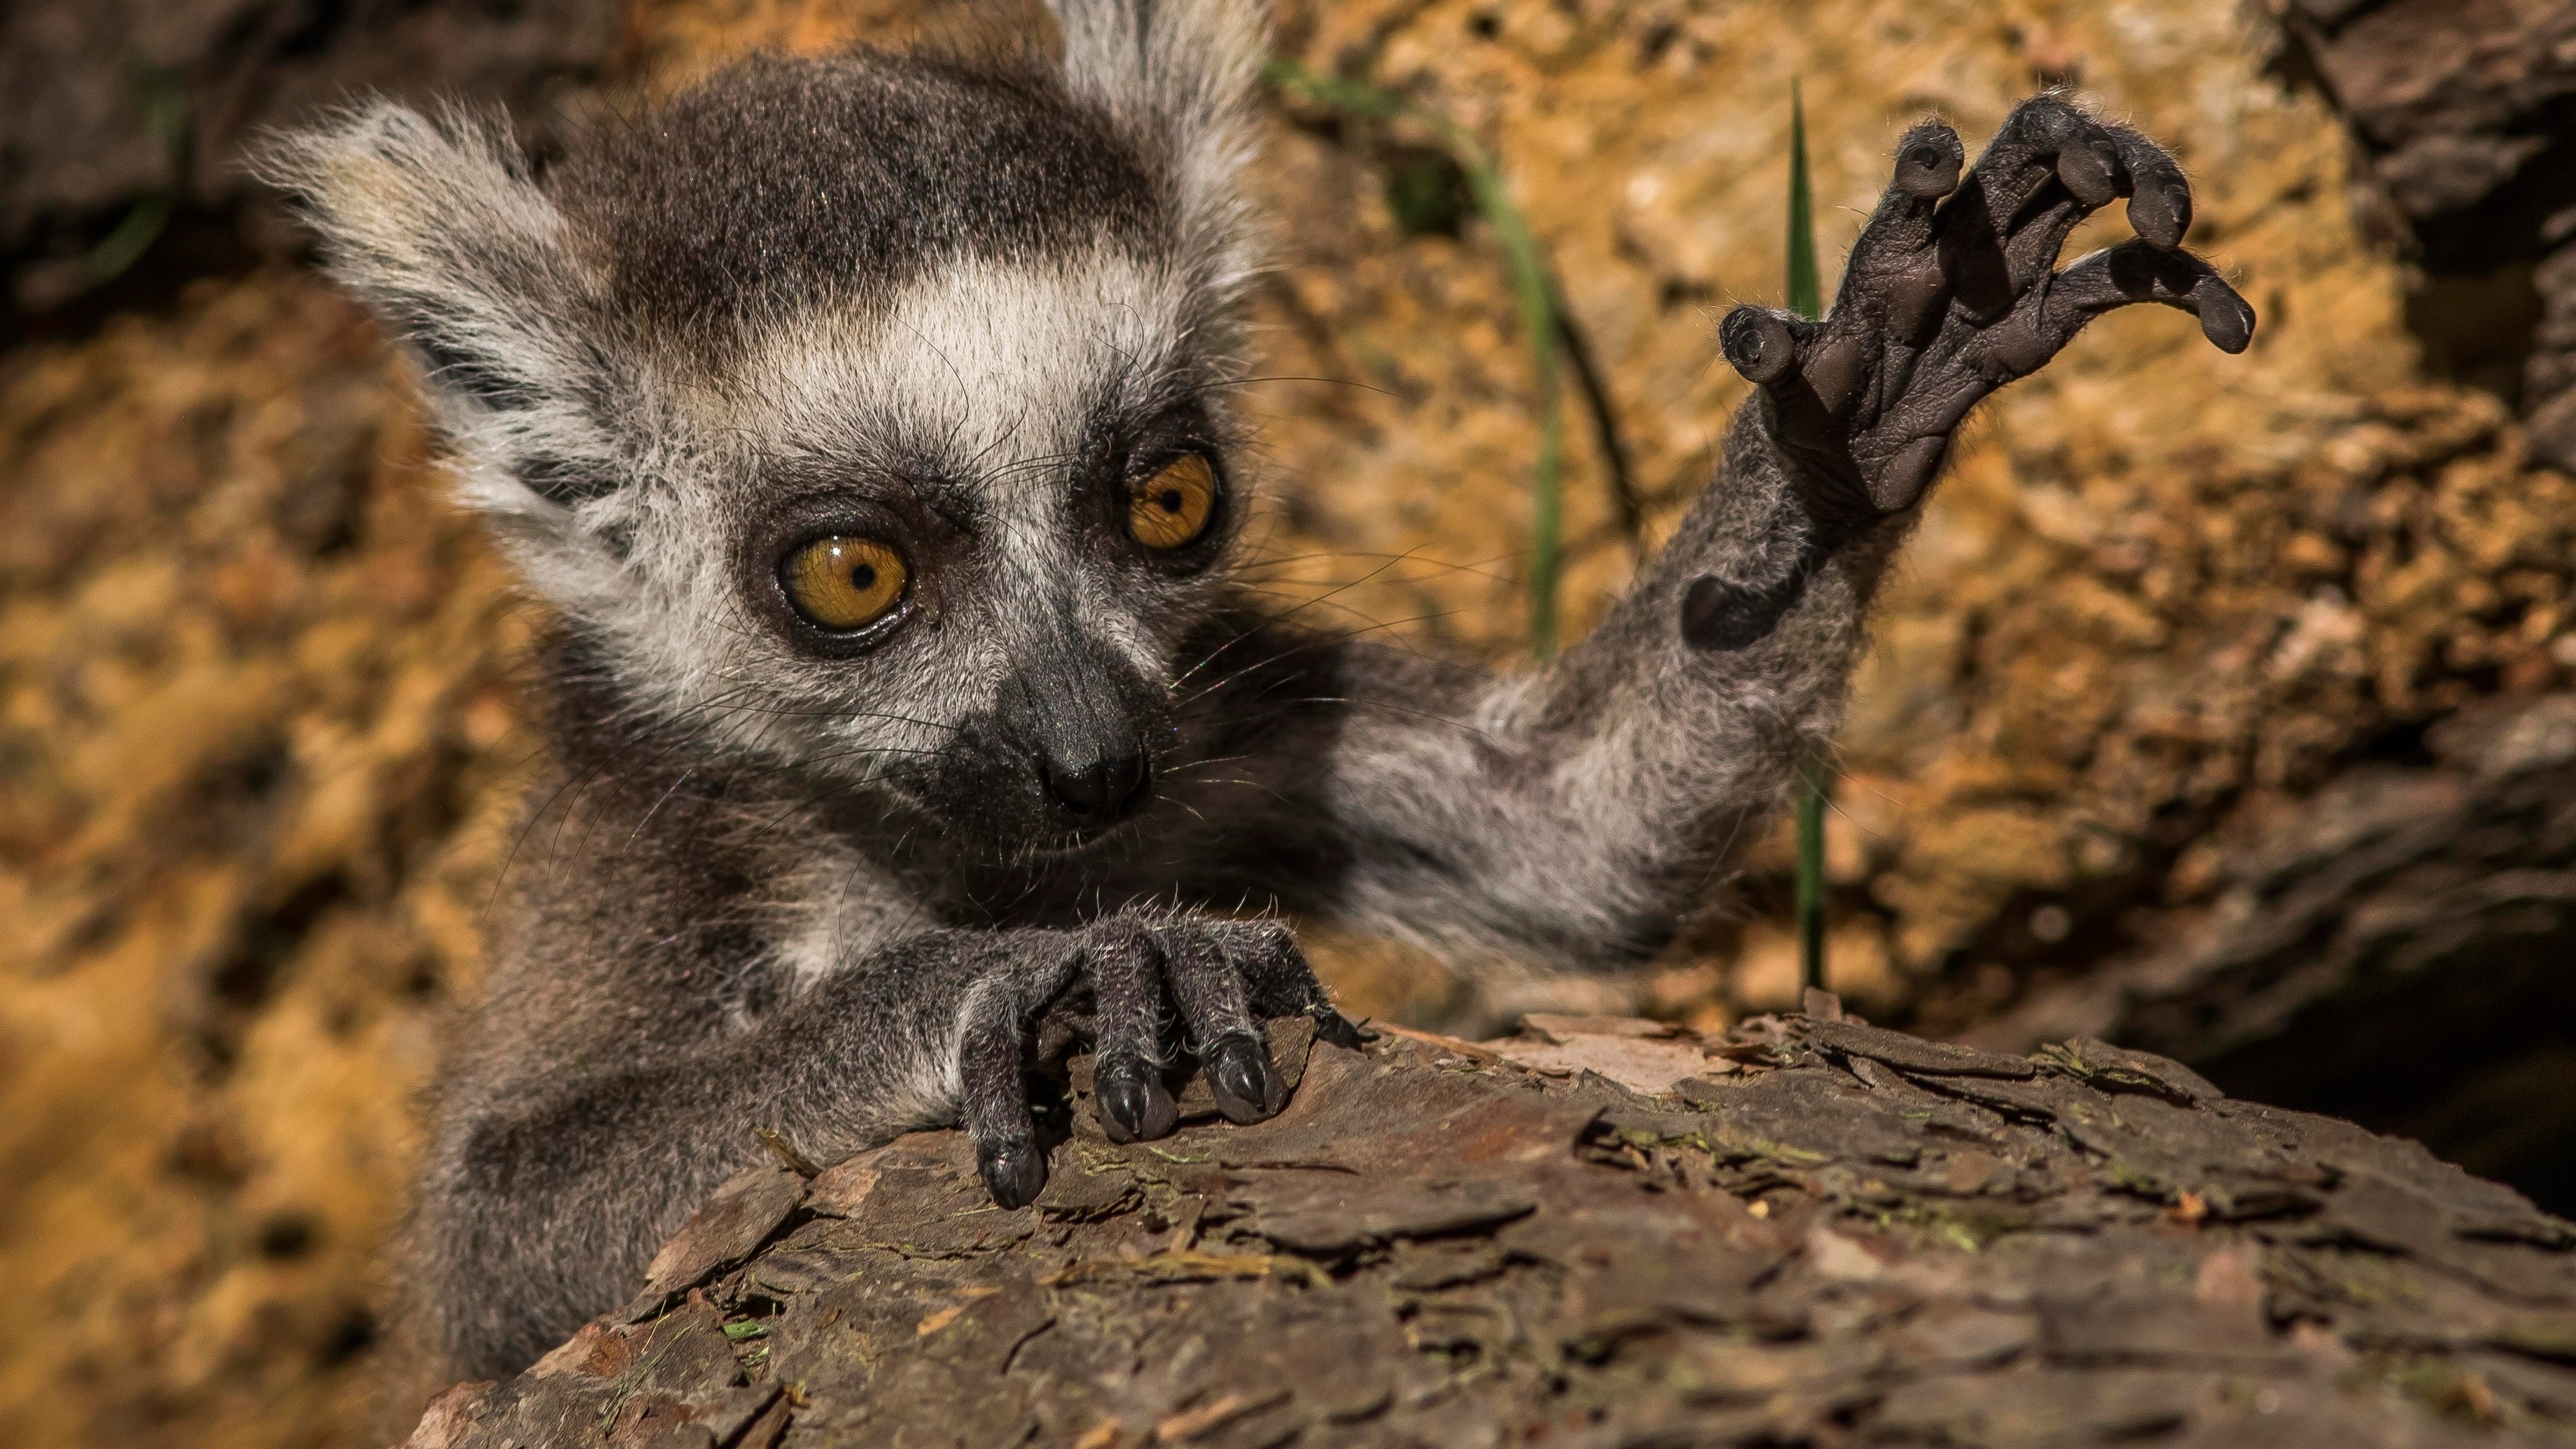 Lemur close-up, Natural wooden background, Detailed view, Rustic charm, 3840x2160 4K Desktop